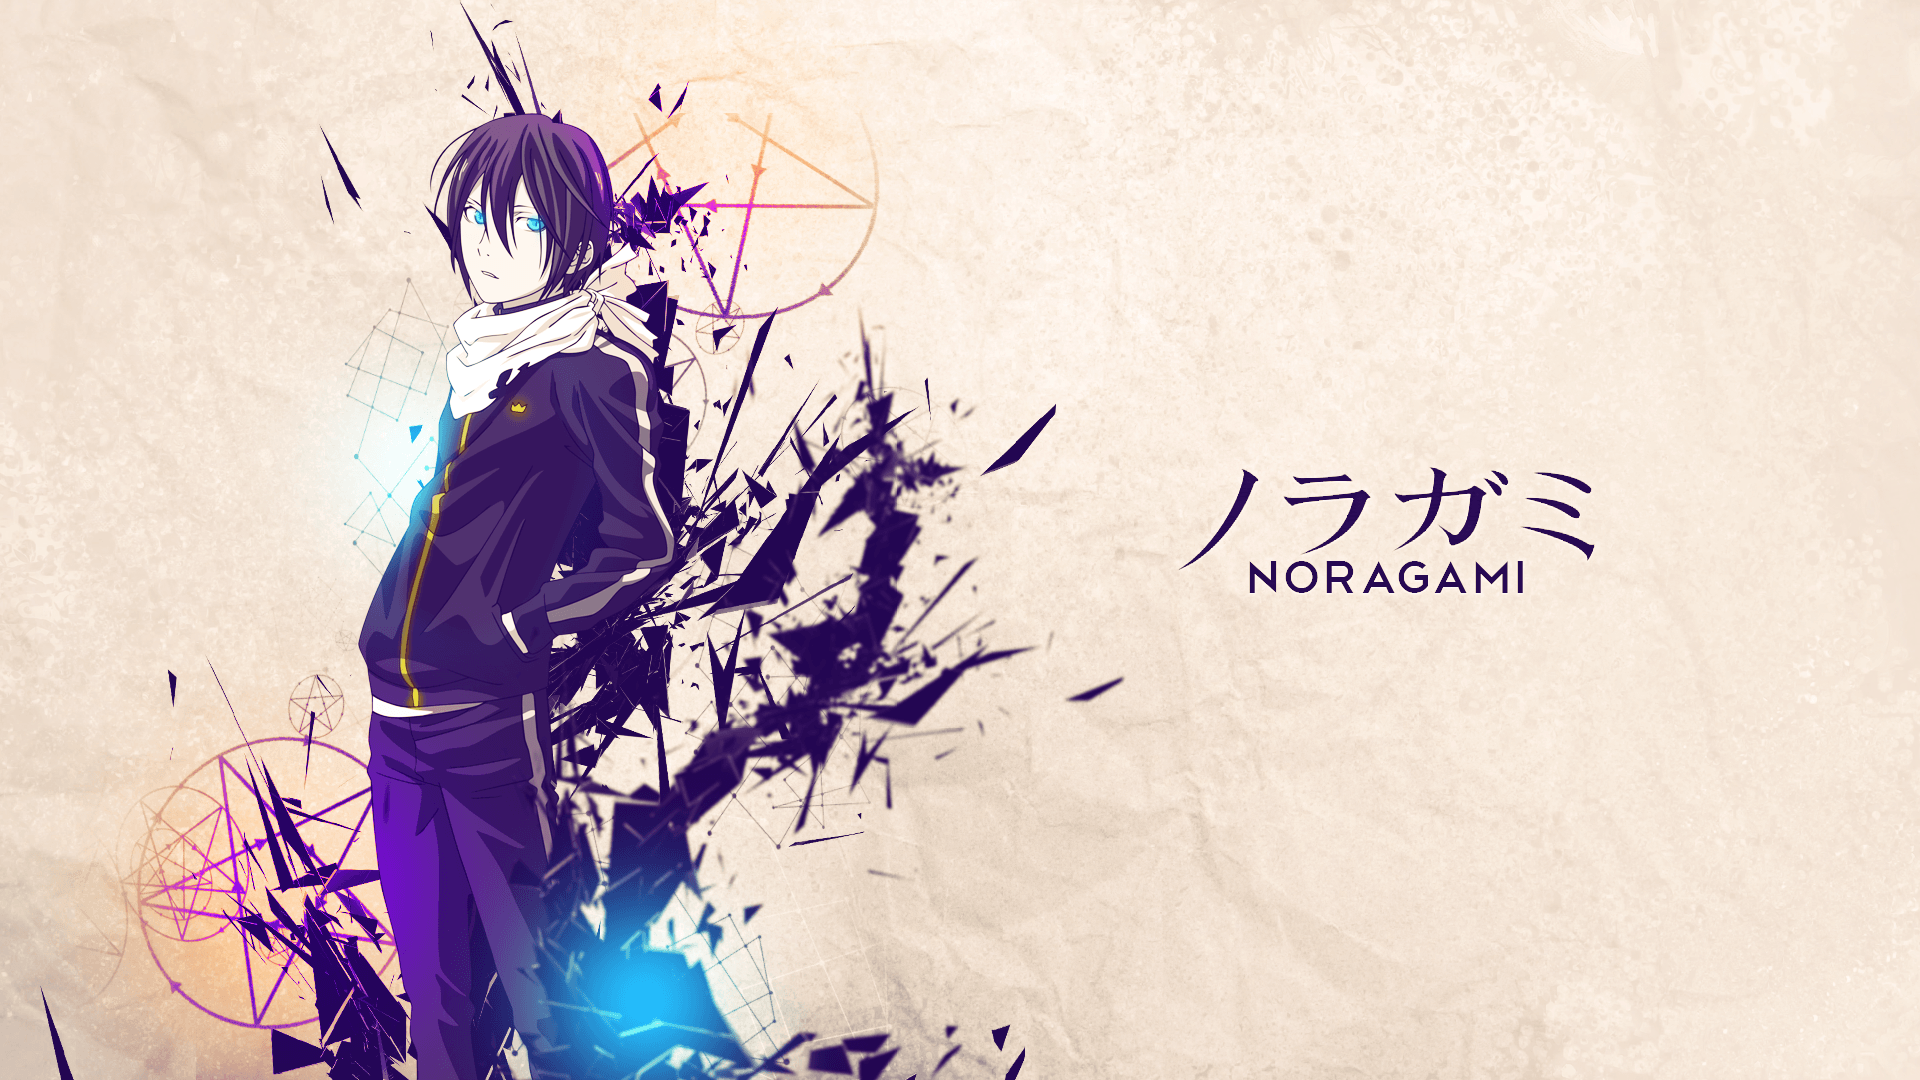 Noragami #Yato. Yato noragami, Noragami anime, Anime wallpaper